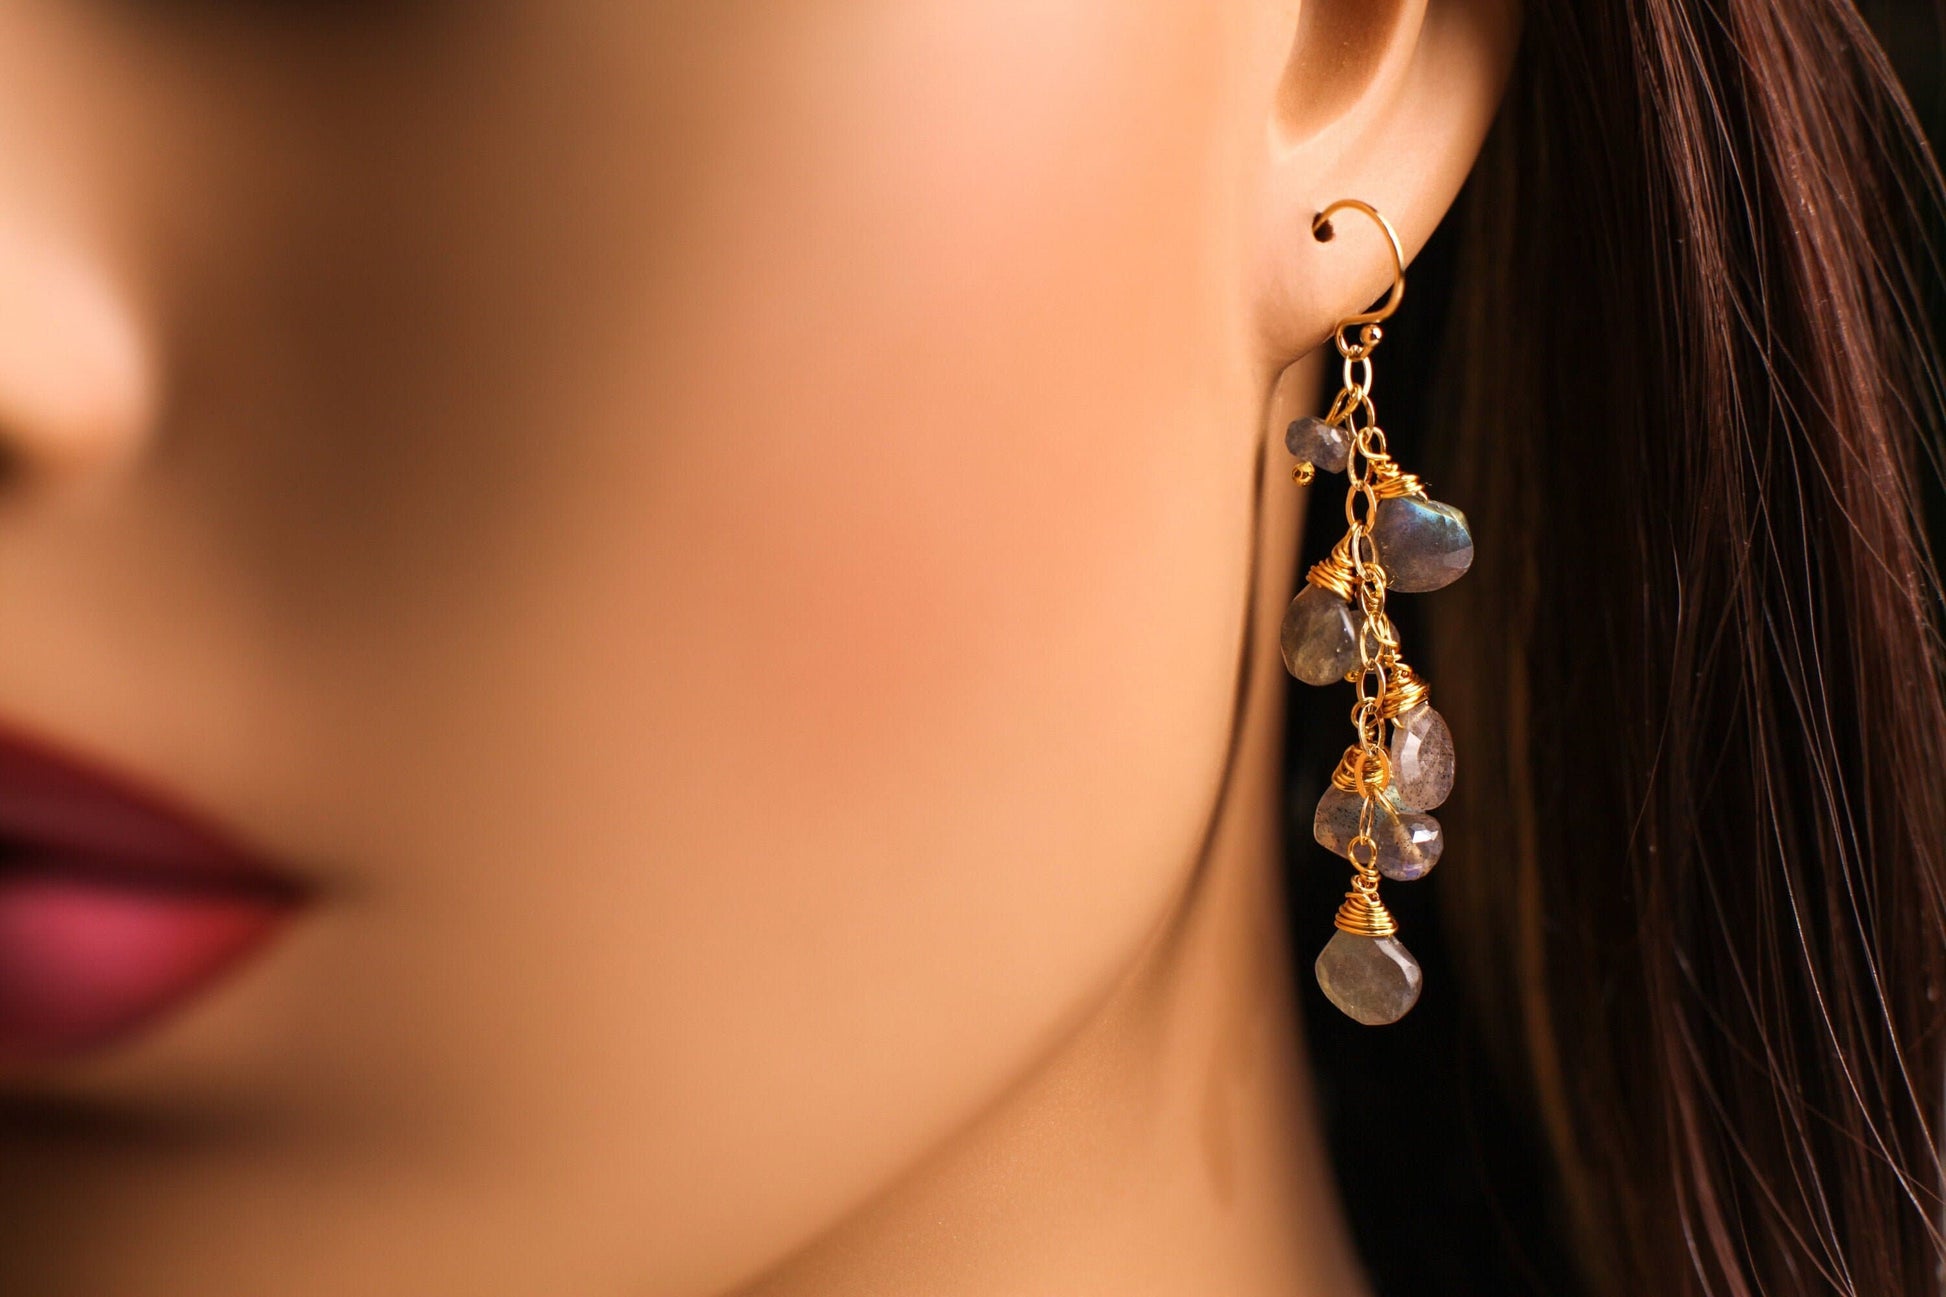 Labradorite Faceted Heart Pear Drop Cascade Dangling Wire Wrap Handmade 14K Gold Filled Earring